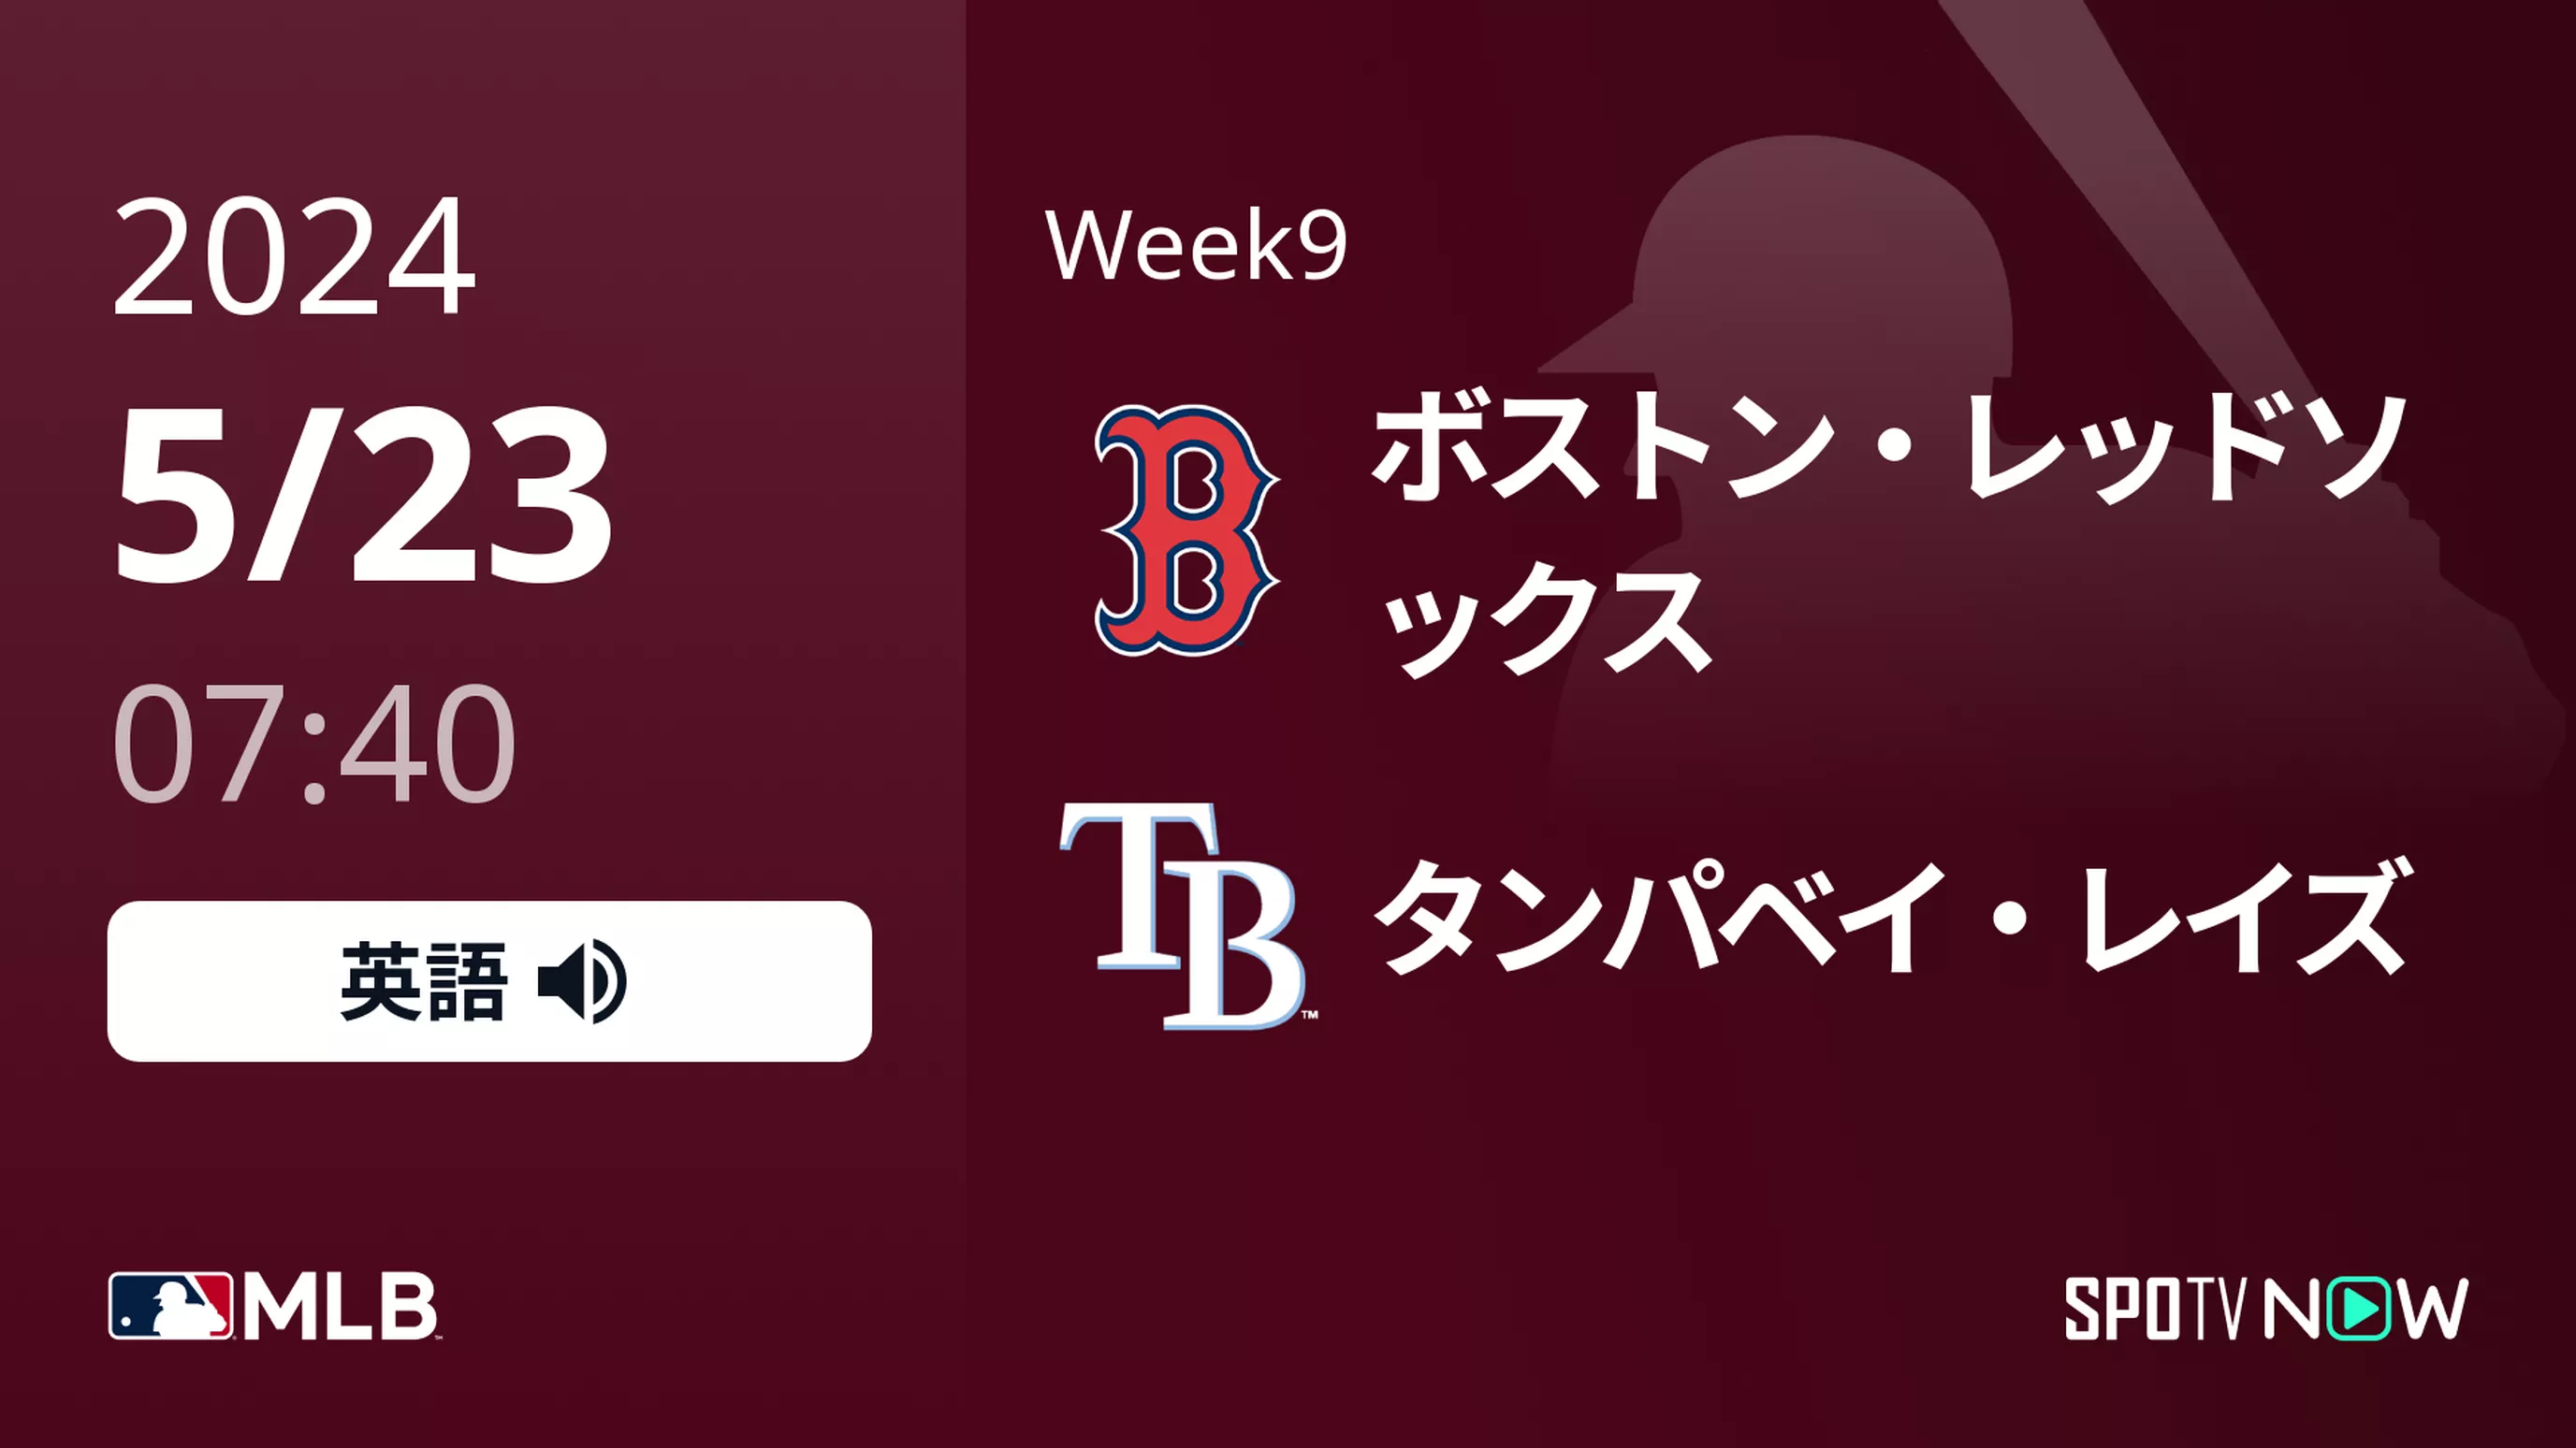 Week9 Rソックス vs レイズ 5/23[MLB]